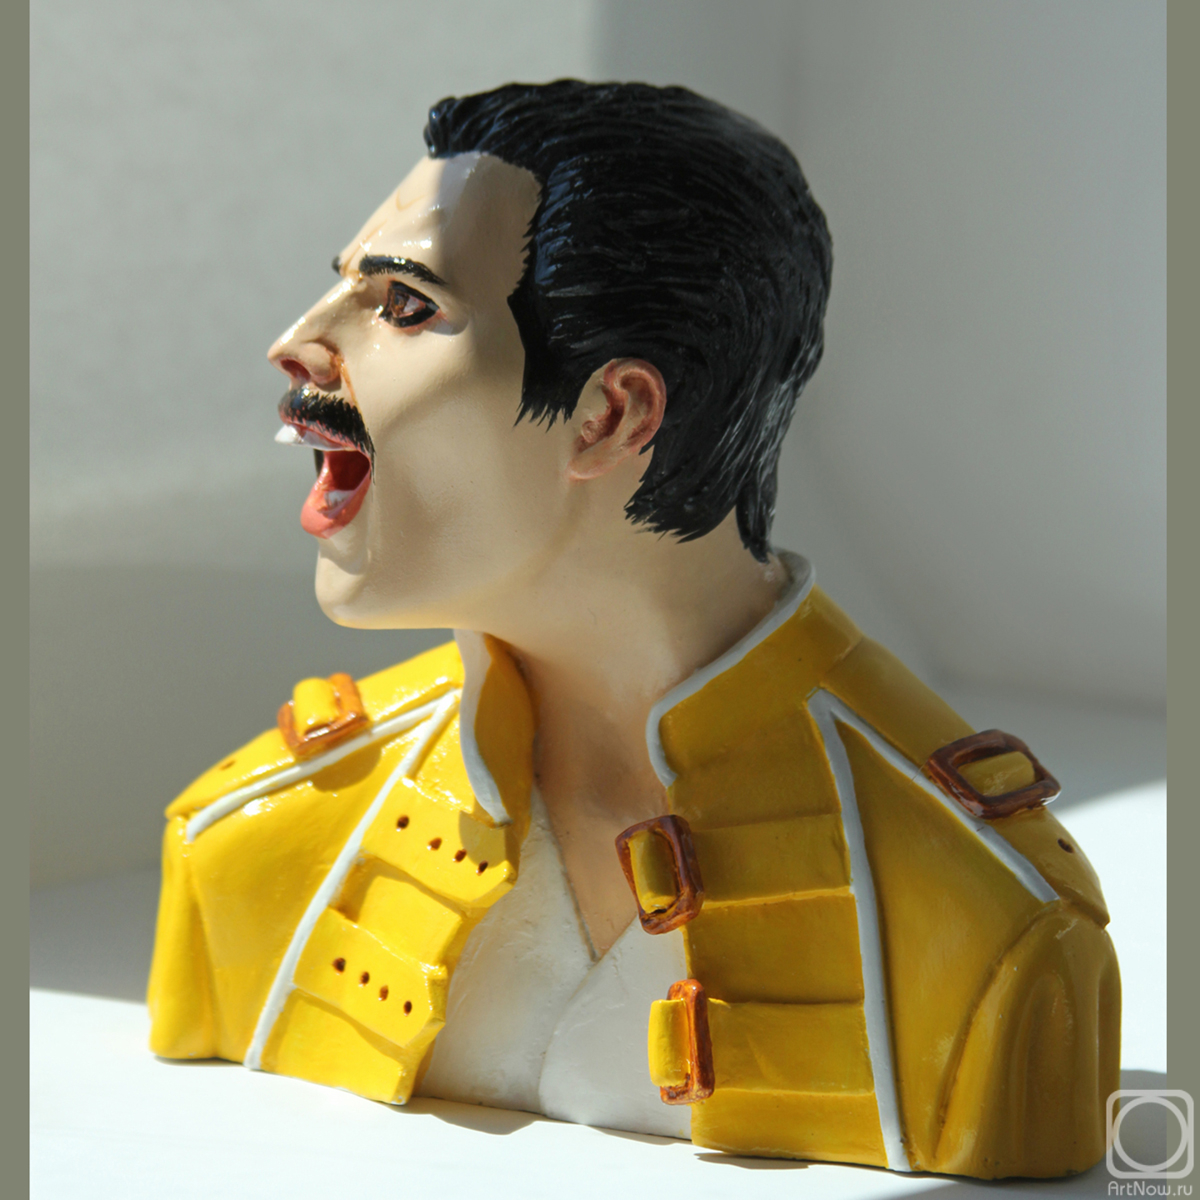 Churkina Larisa. Freddie Mercury figure in an yellow jaket (Rockportrait)